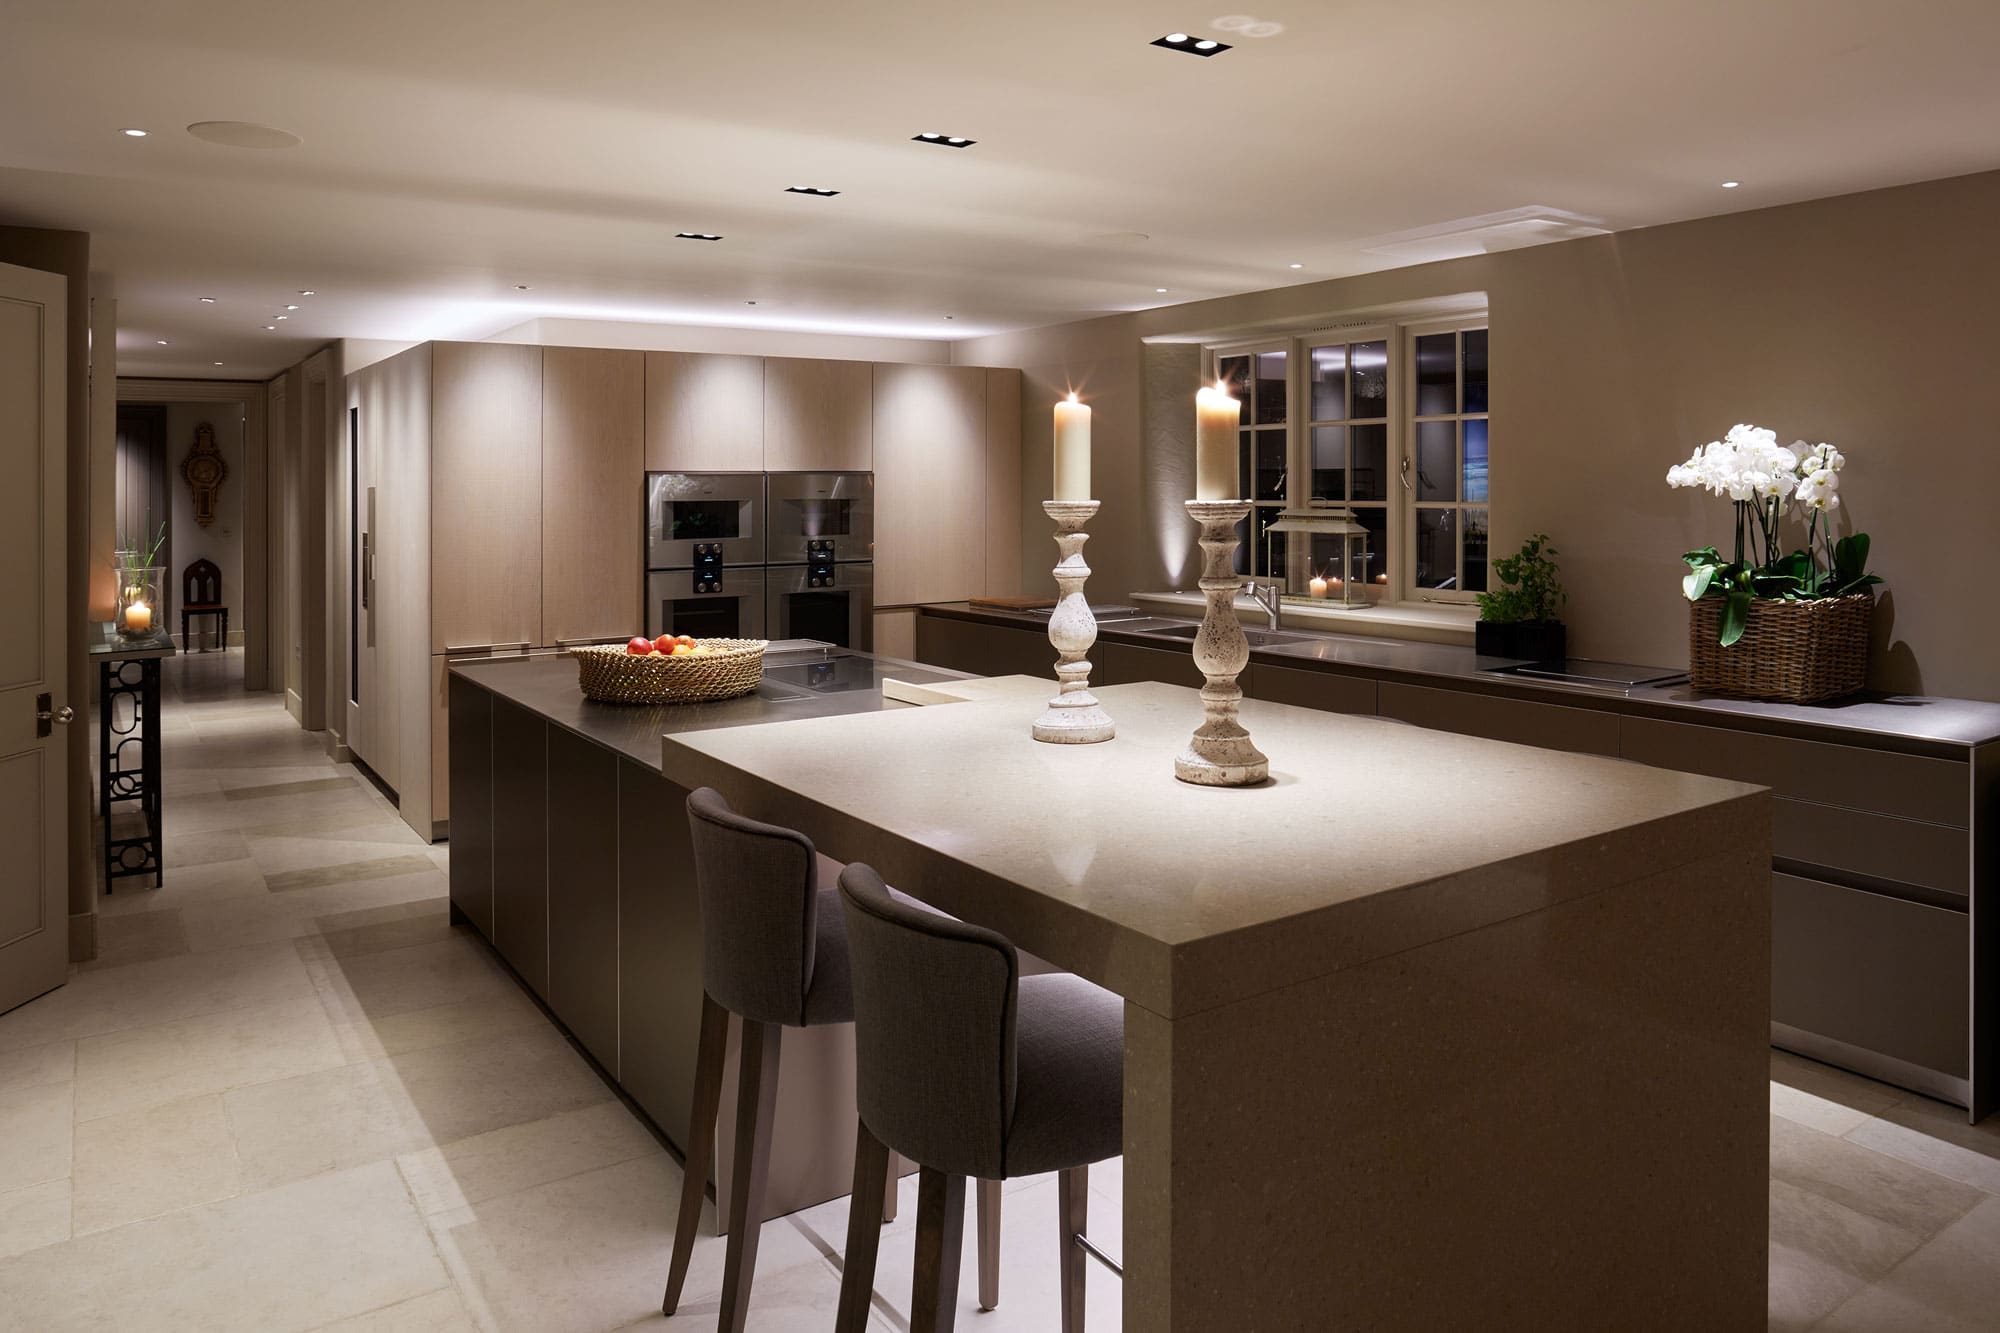 Ultra modern kitchen with spotlights